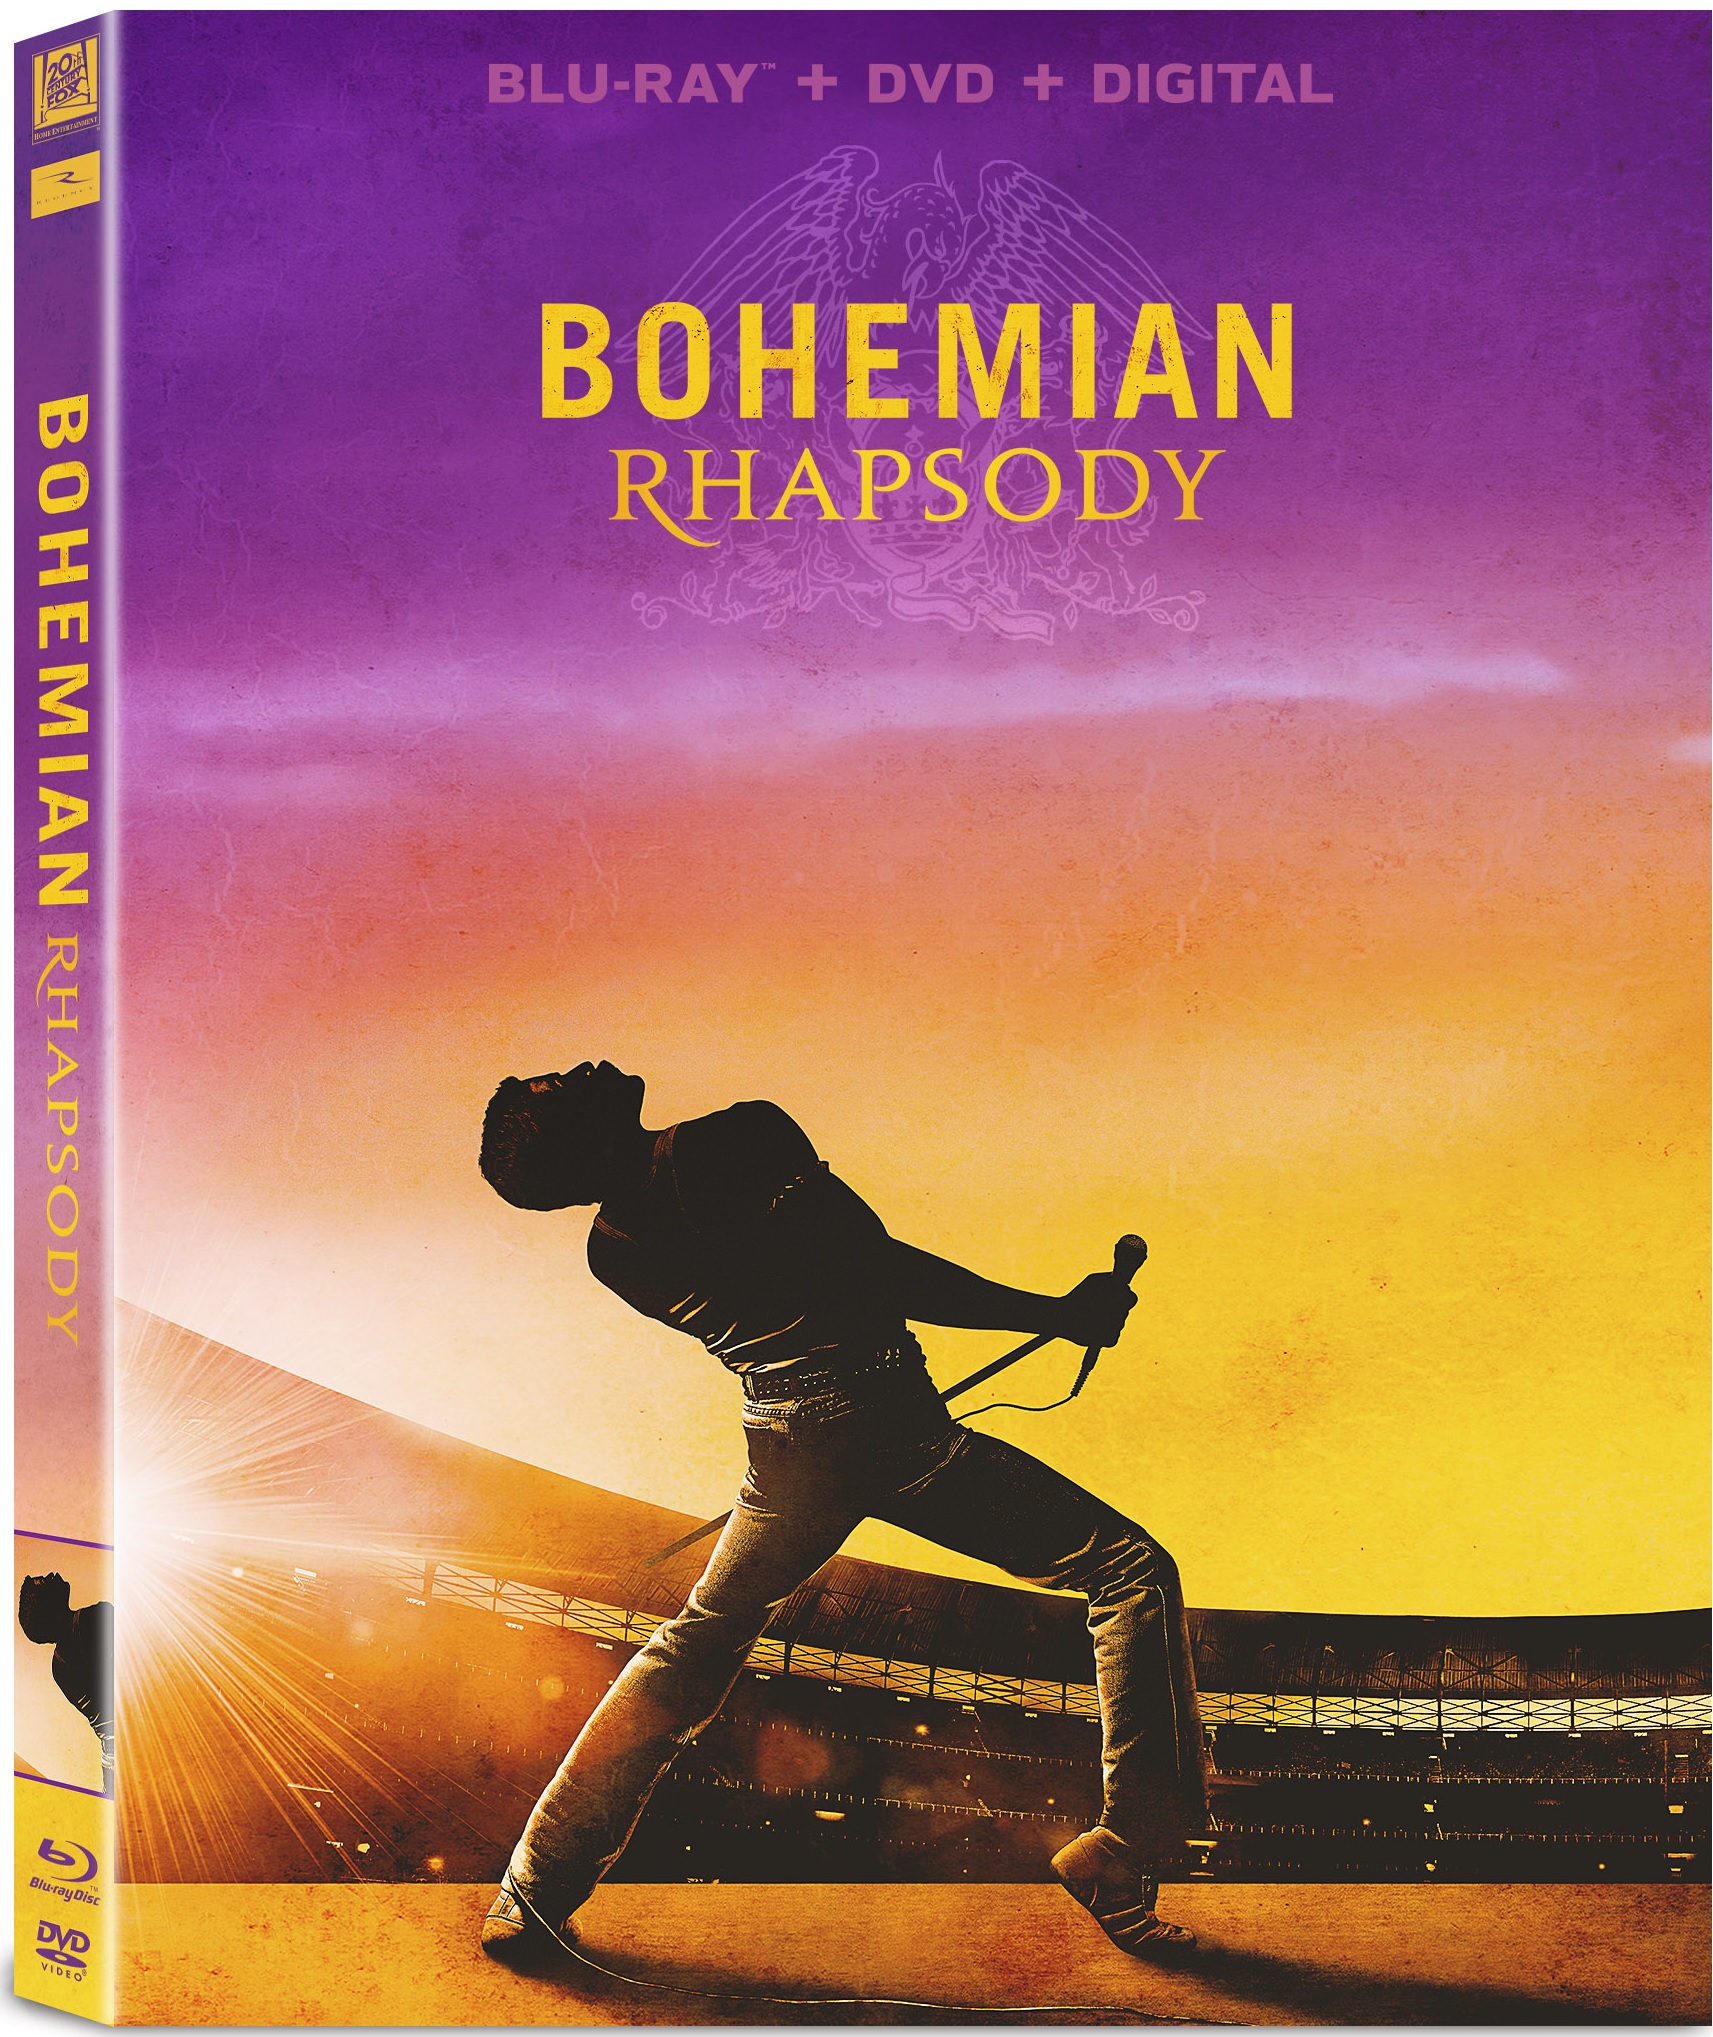 Bohemian Rhapsody Blu-ray Review